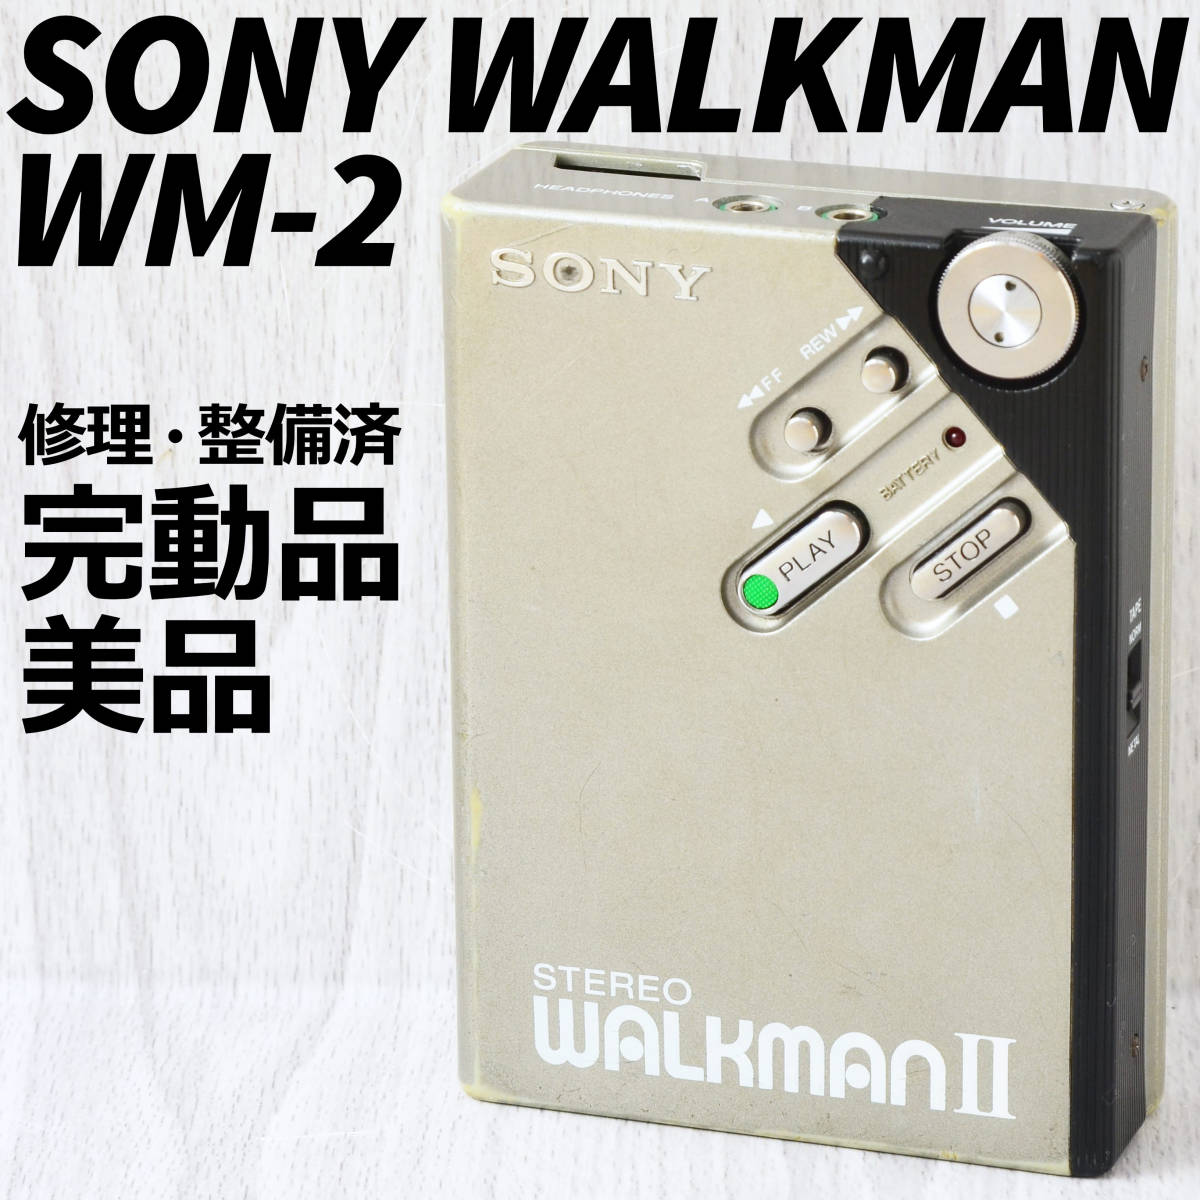 SONY WALKMAN WM-2 カセットウォークマン 銀 整備済